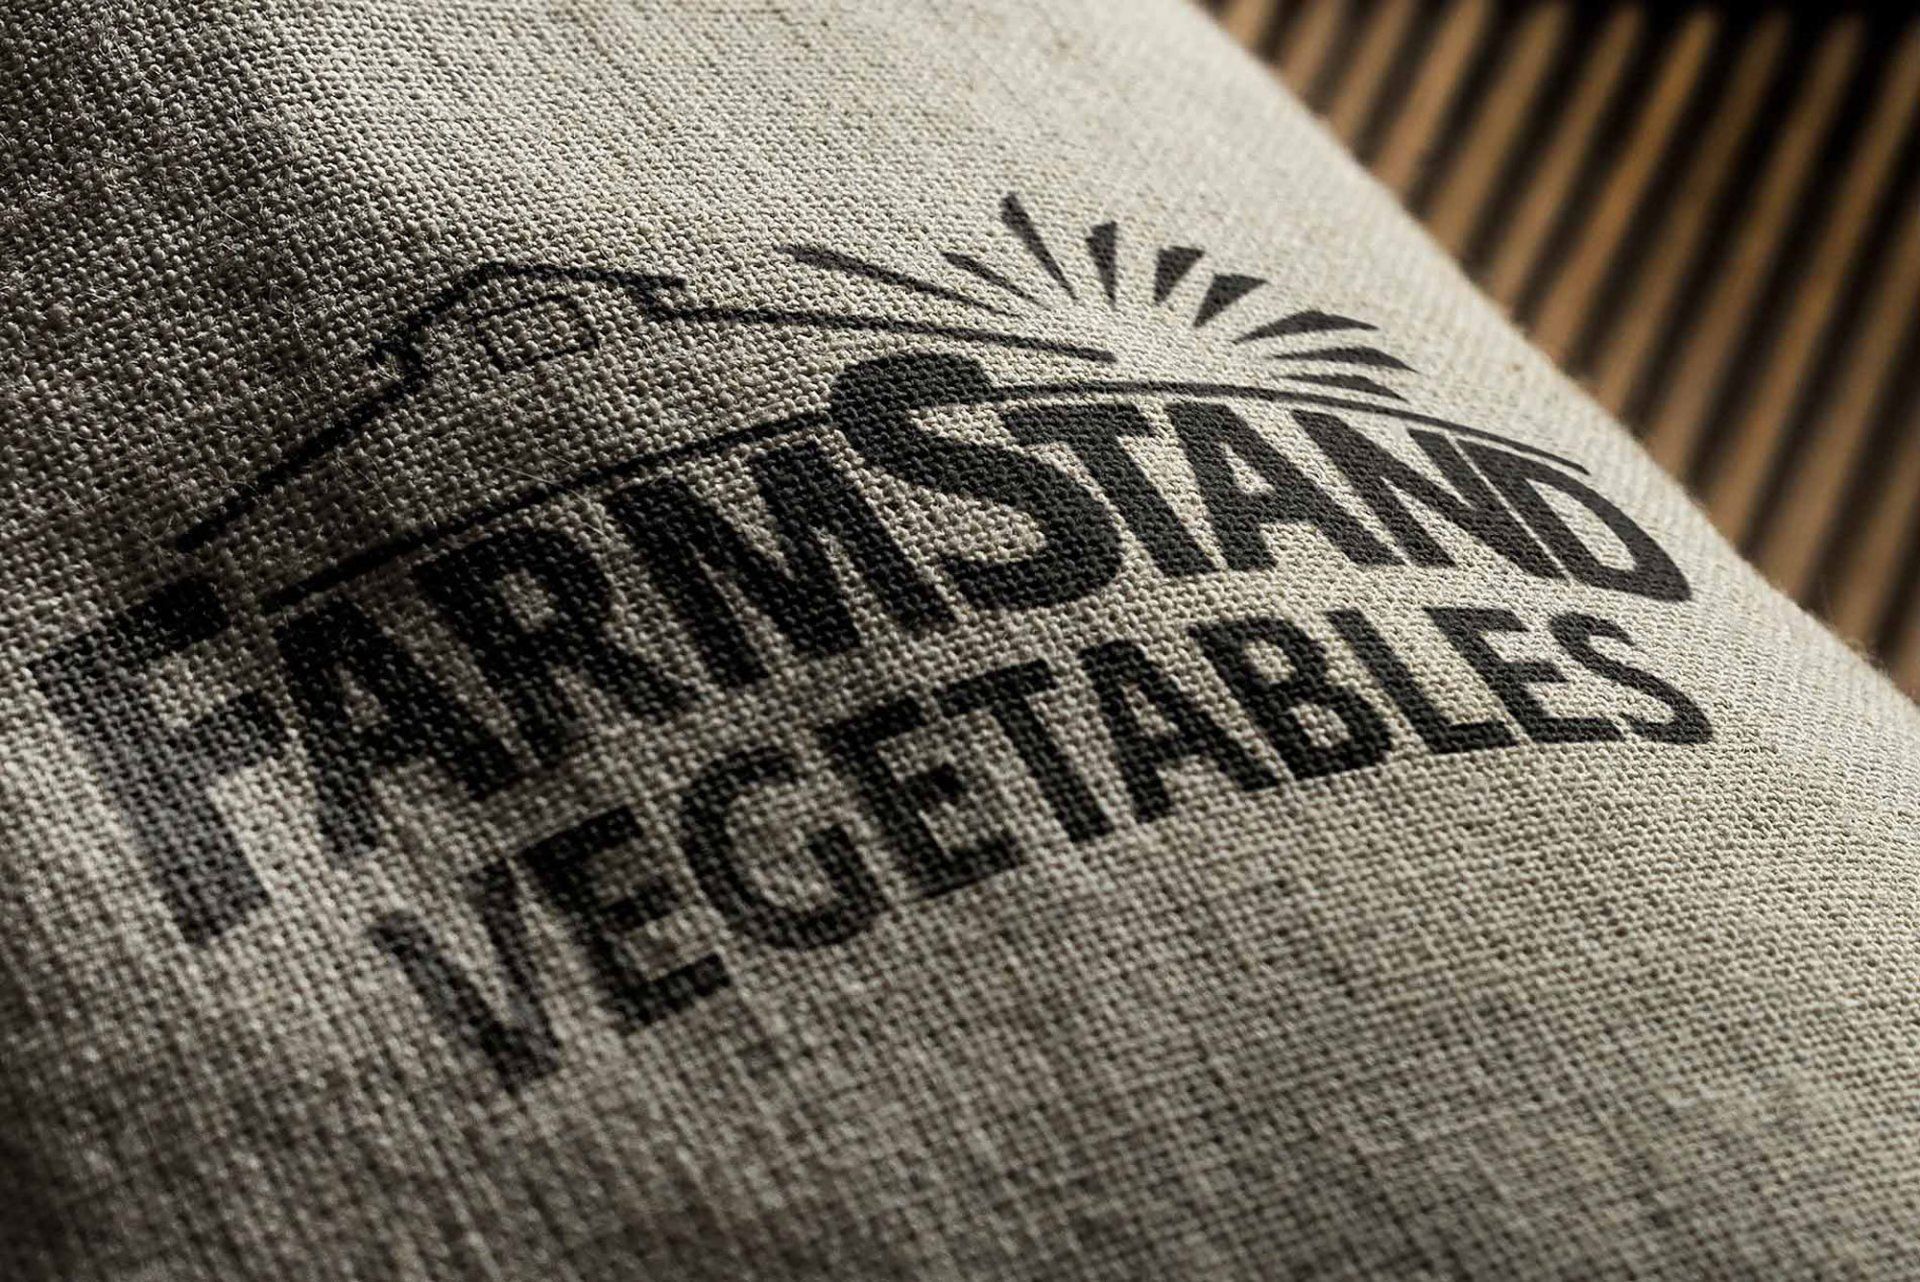 Home Depot's Farmstand Vegetables logo printed on a potato sack.